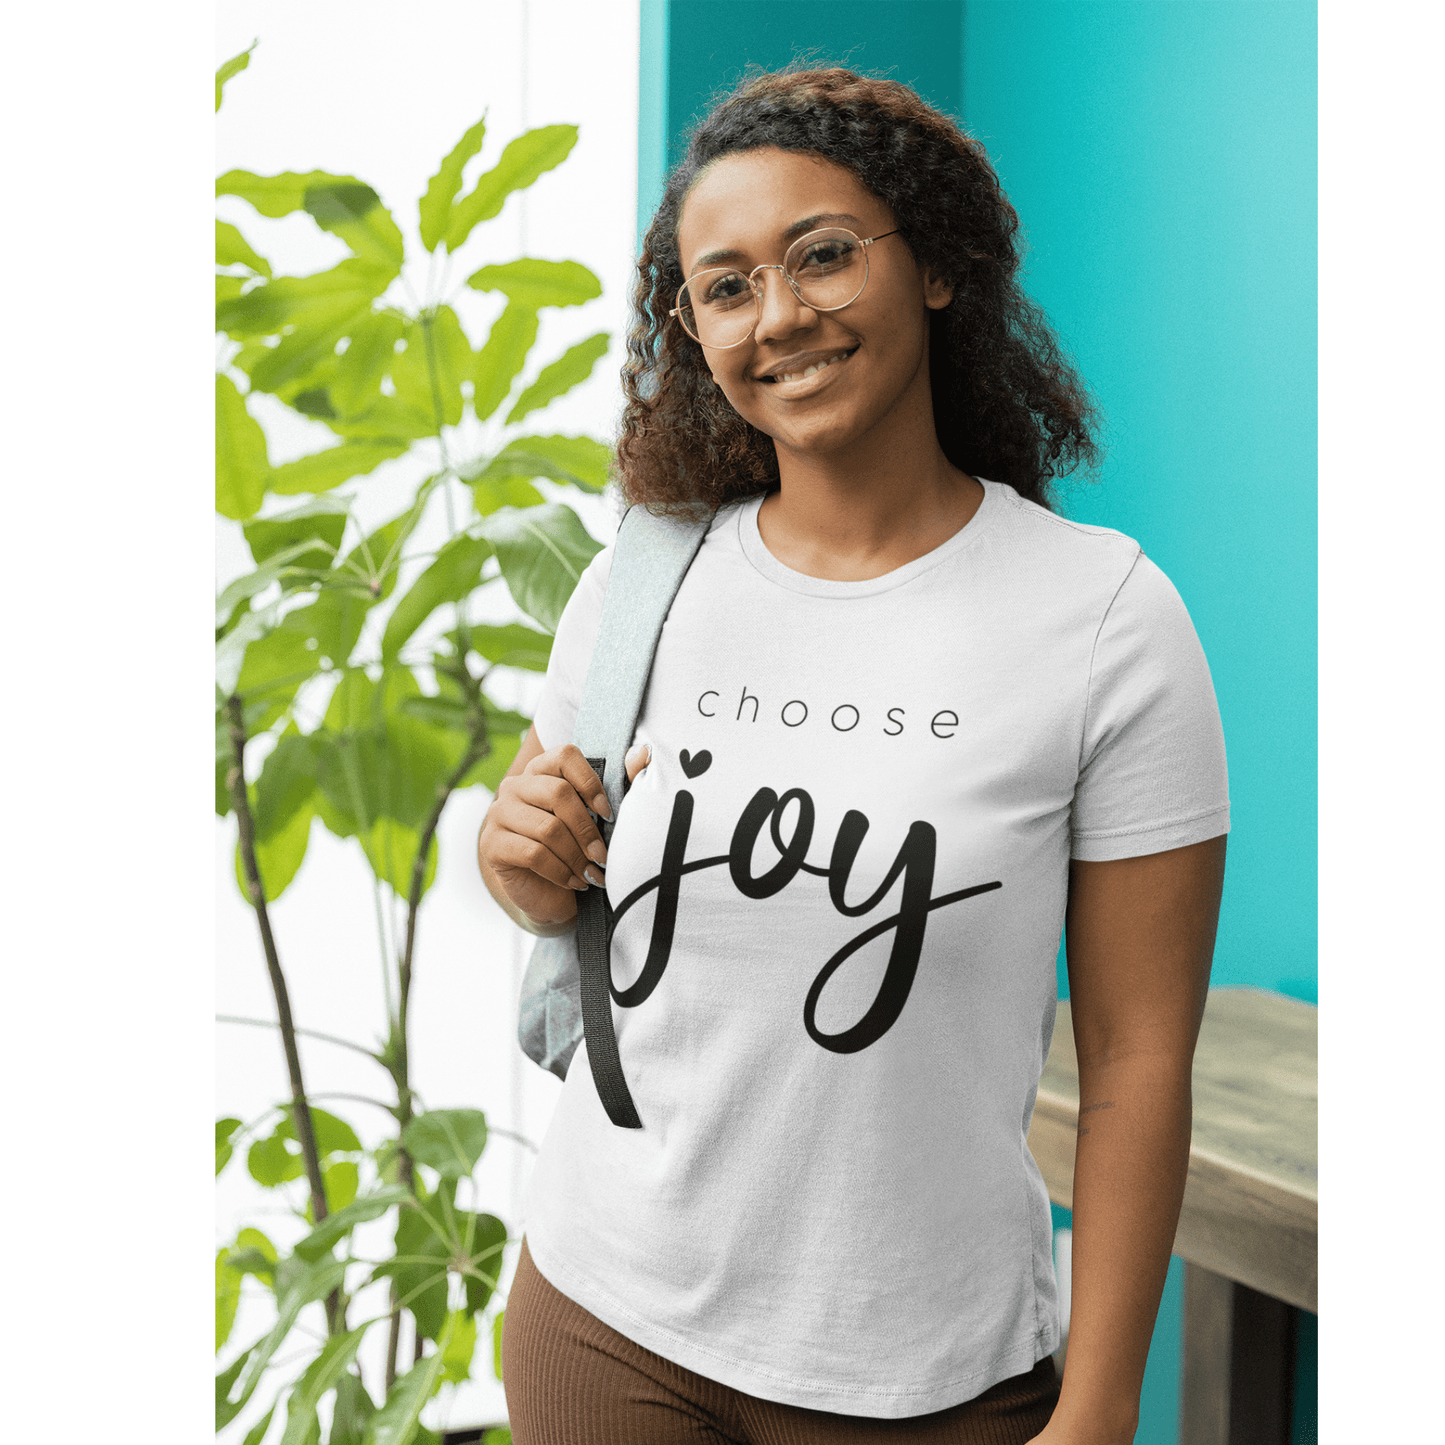 Choose Joy (Graphic Black Text) Unisex Jersey Short Sleeve Tee - Style: Bella+Canvas 3001